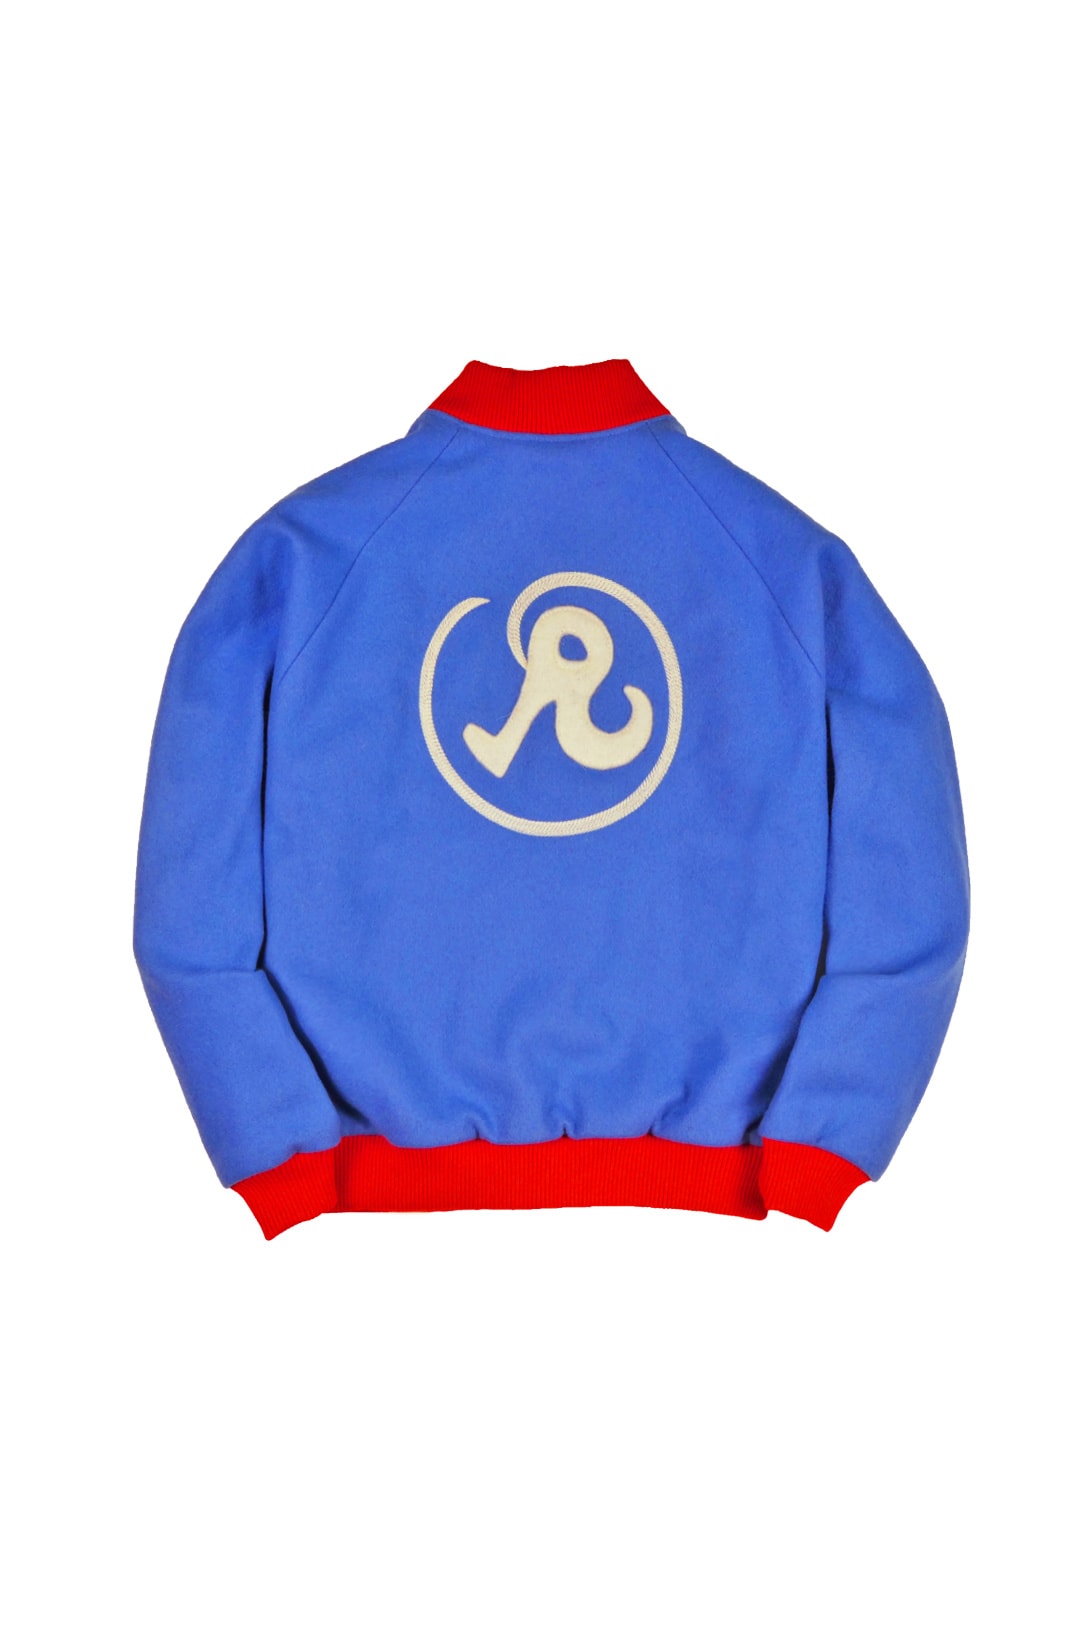 Richardson Car Club Jackets Opium Bunny Collection fashion apparel jackets t shirt crewneck hoodie